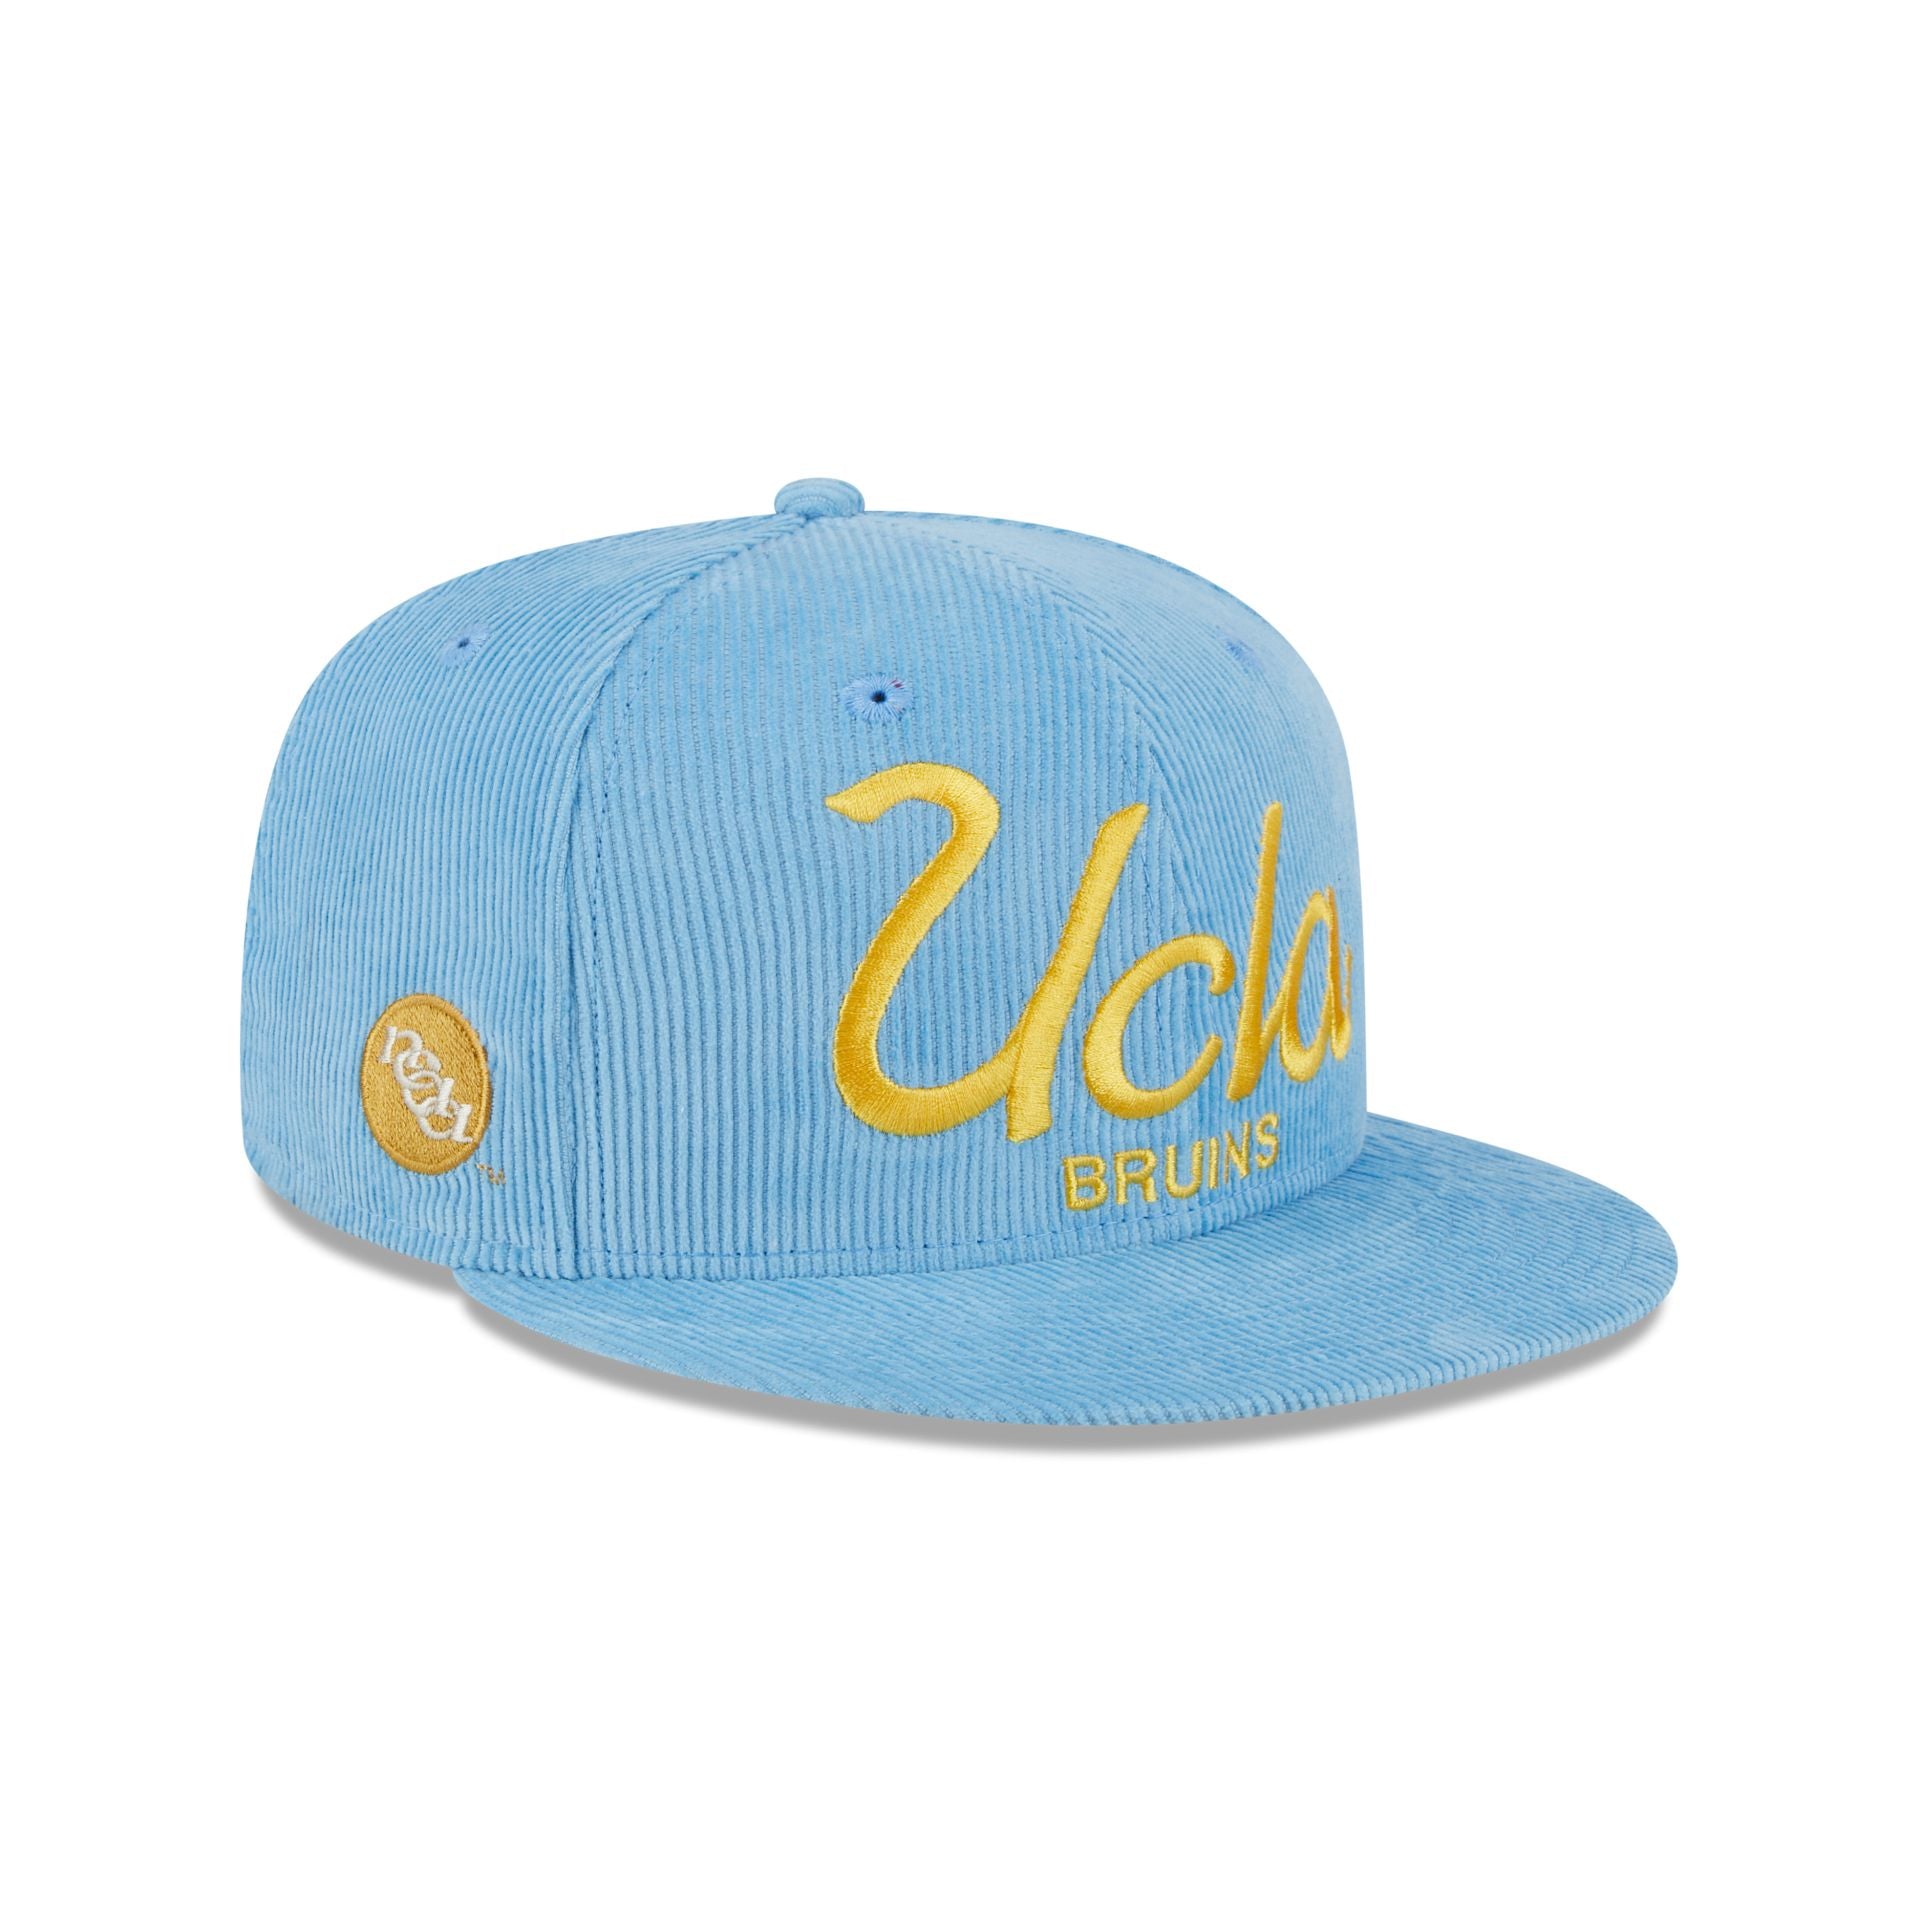 UCLA Bruins Vintage 9FIFTY Snapback Hat – New Era Cap